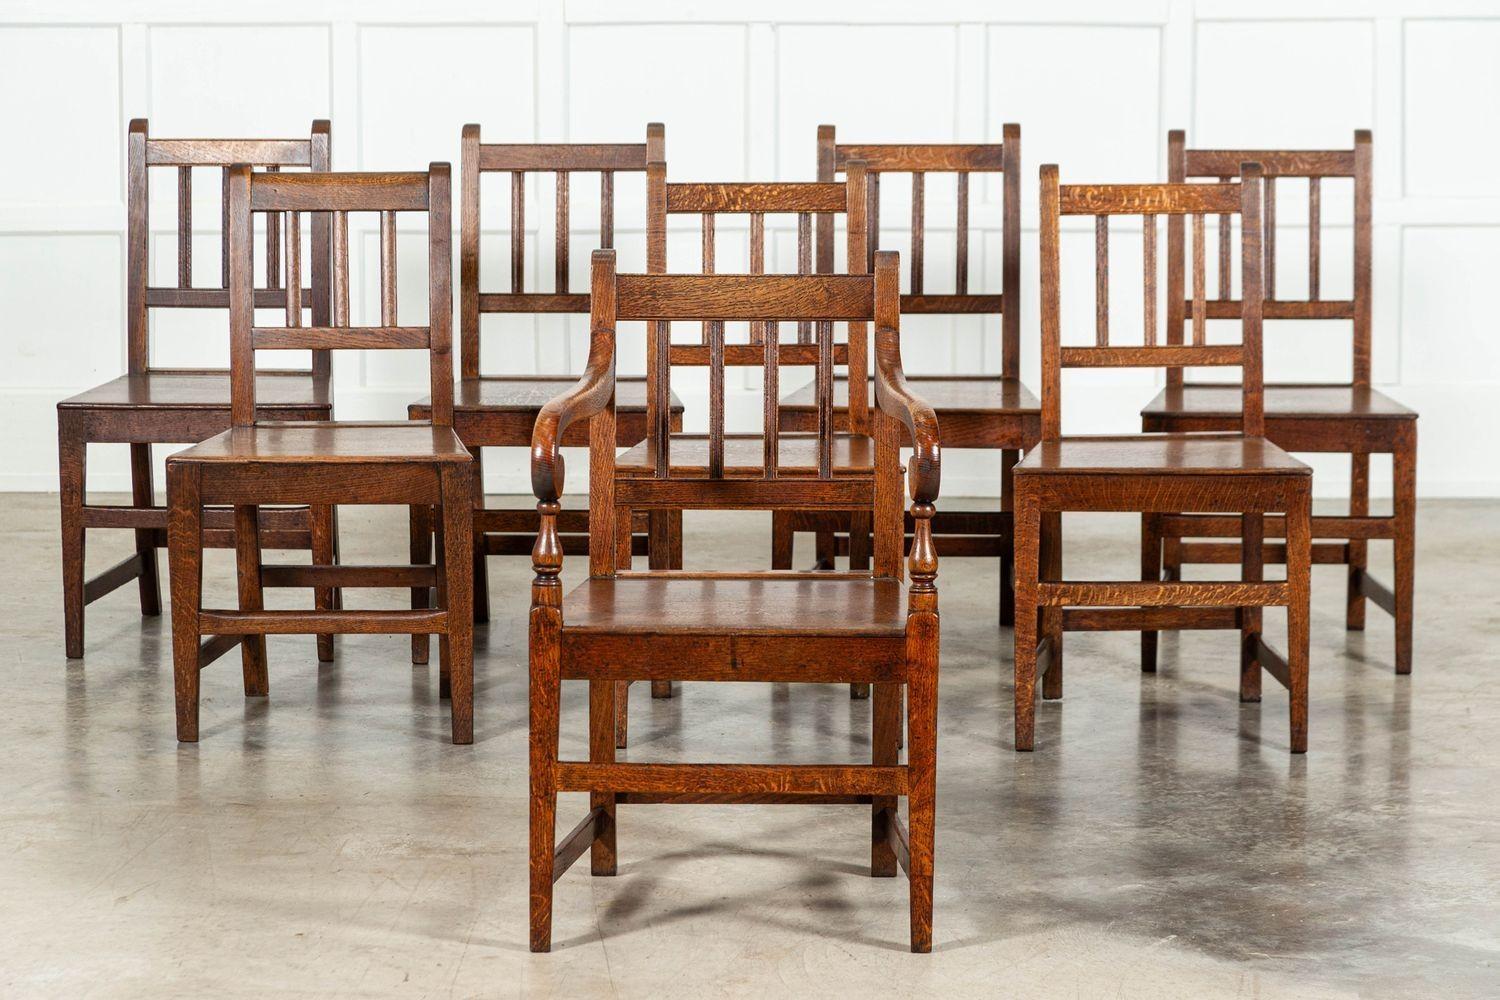 circa 1890
Set 8 19thC English Oak Vernacular Chairs
sku 1810
W34 x D38 x H86 cm
Seat height 43 cm
Weight 5 kg
Captain seat
W41 x D41 x H84 cm
Seat height 41 cm
Weight 7 kg